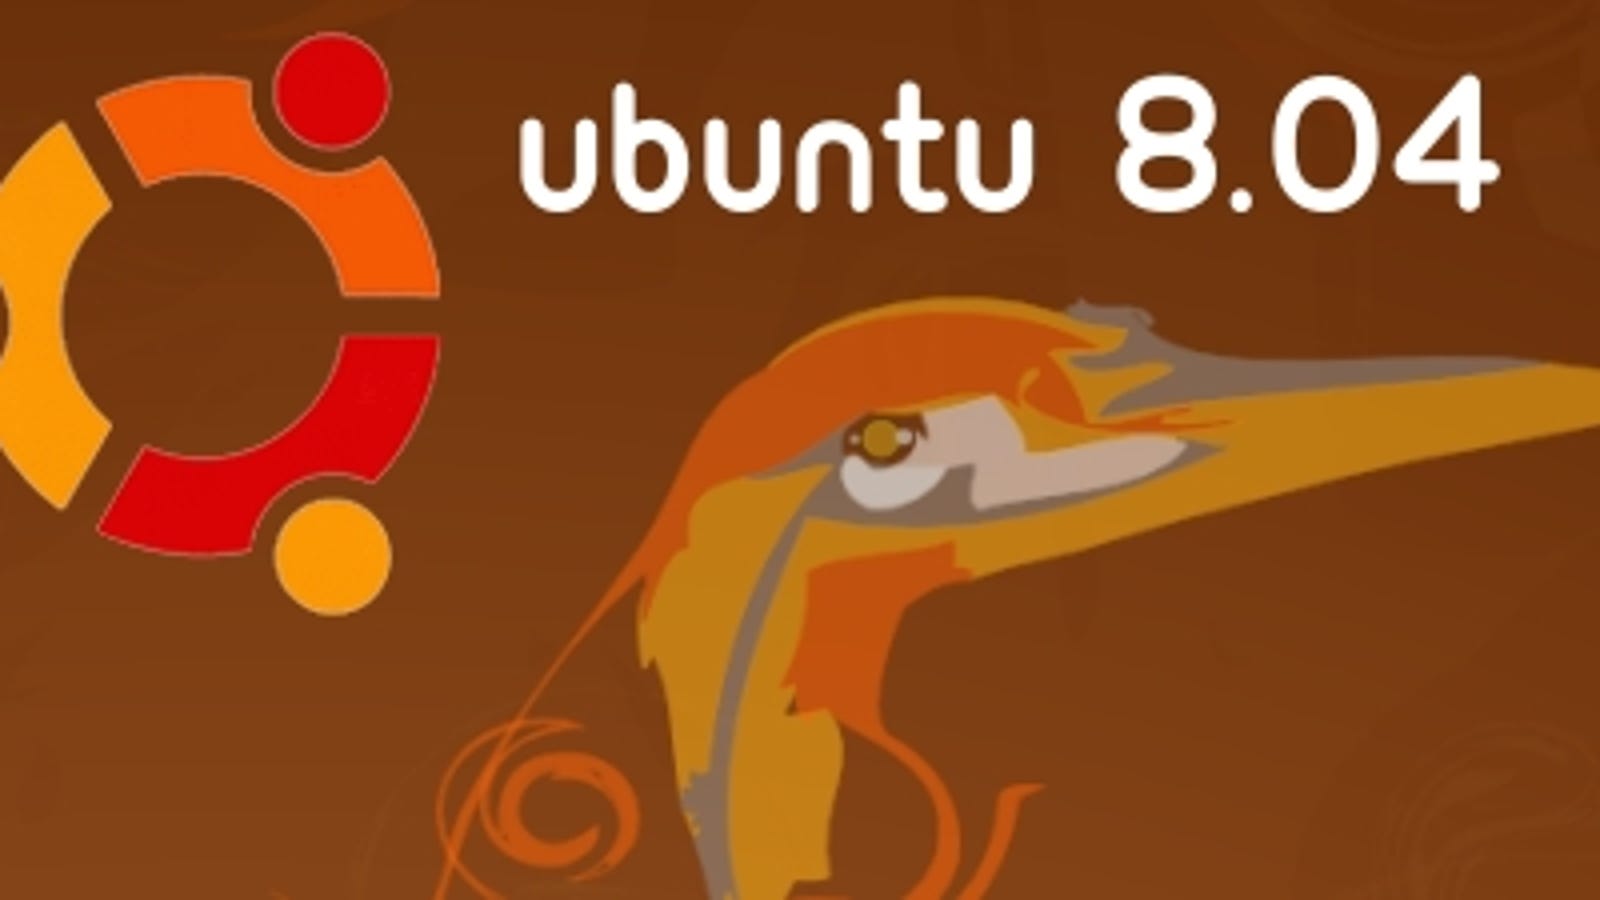 ubuntu 8.04 lts hardy heron